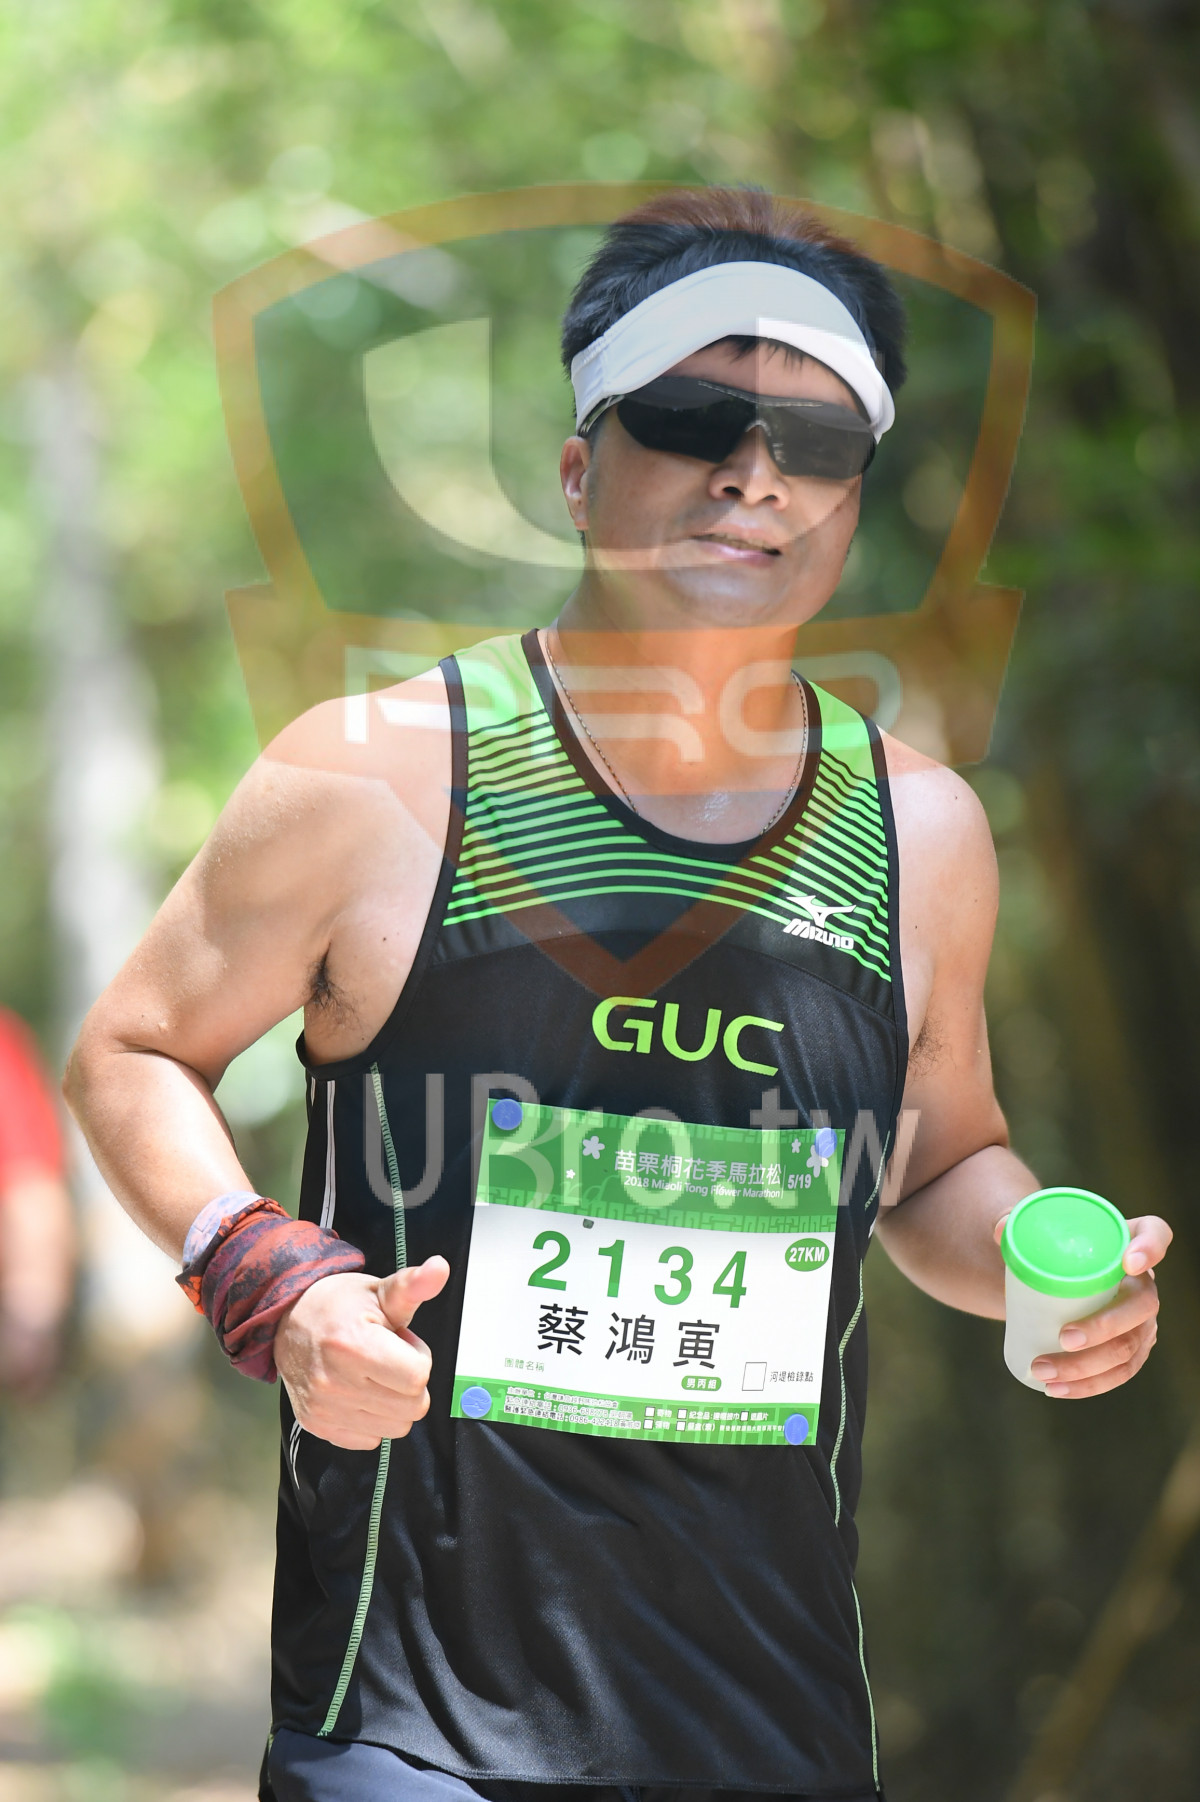 GUC,*5119,2018 Miaoli Tong Fléwer Marathon,2134,,27KM,|綠色隧道1|中年人